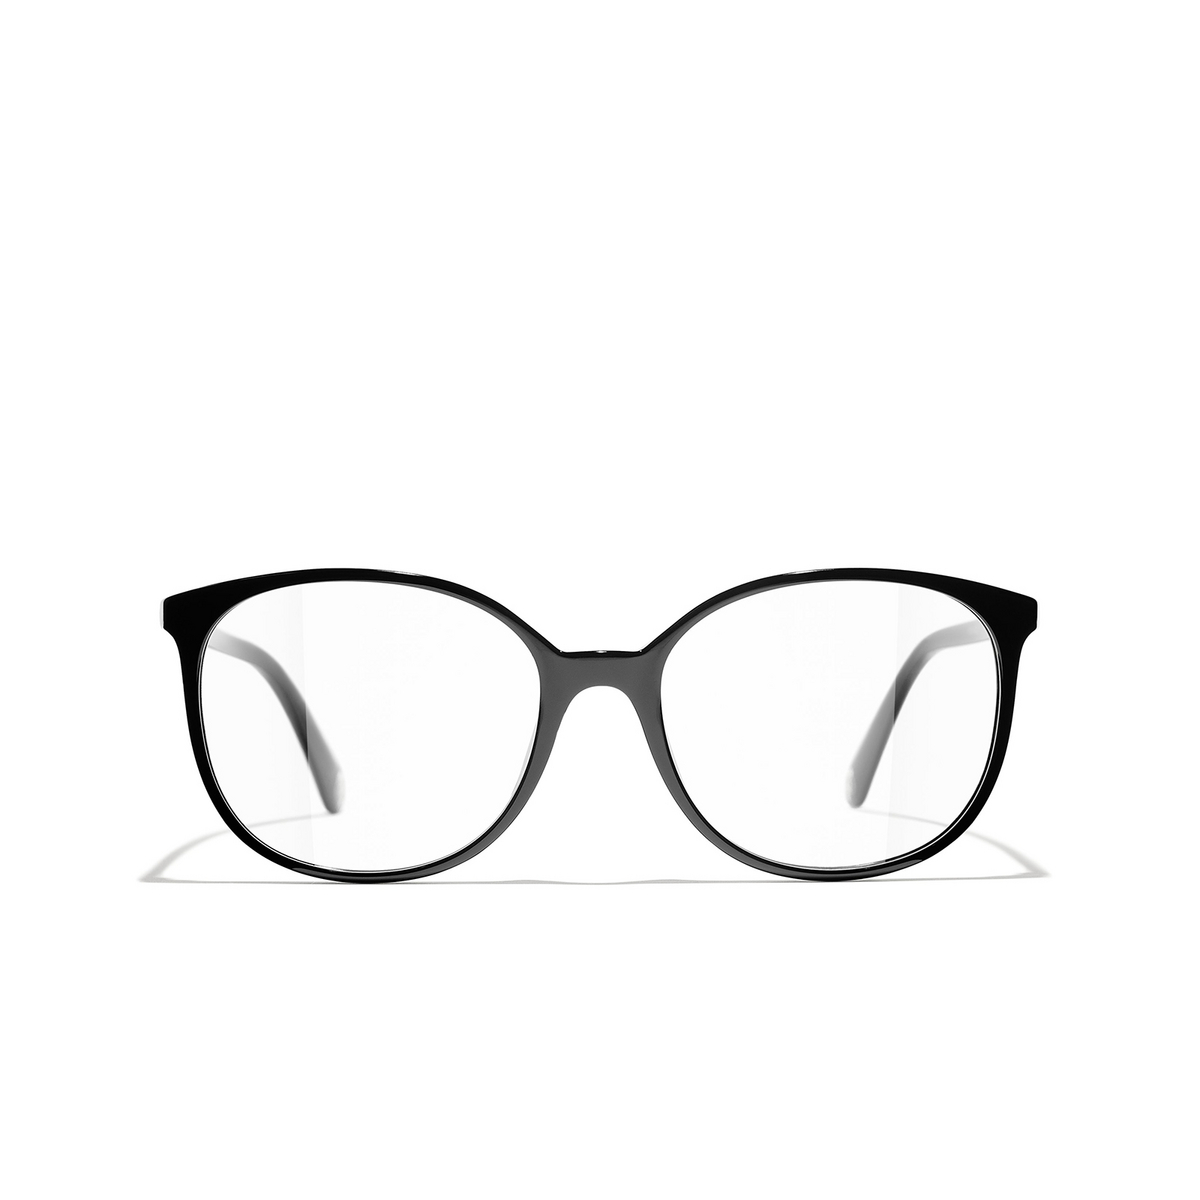 CHANEL pantos Eyeglasses C501 Black - front view